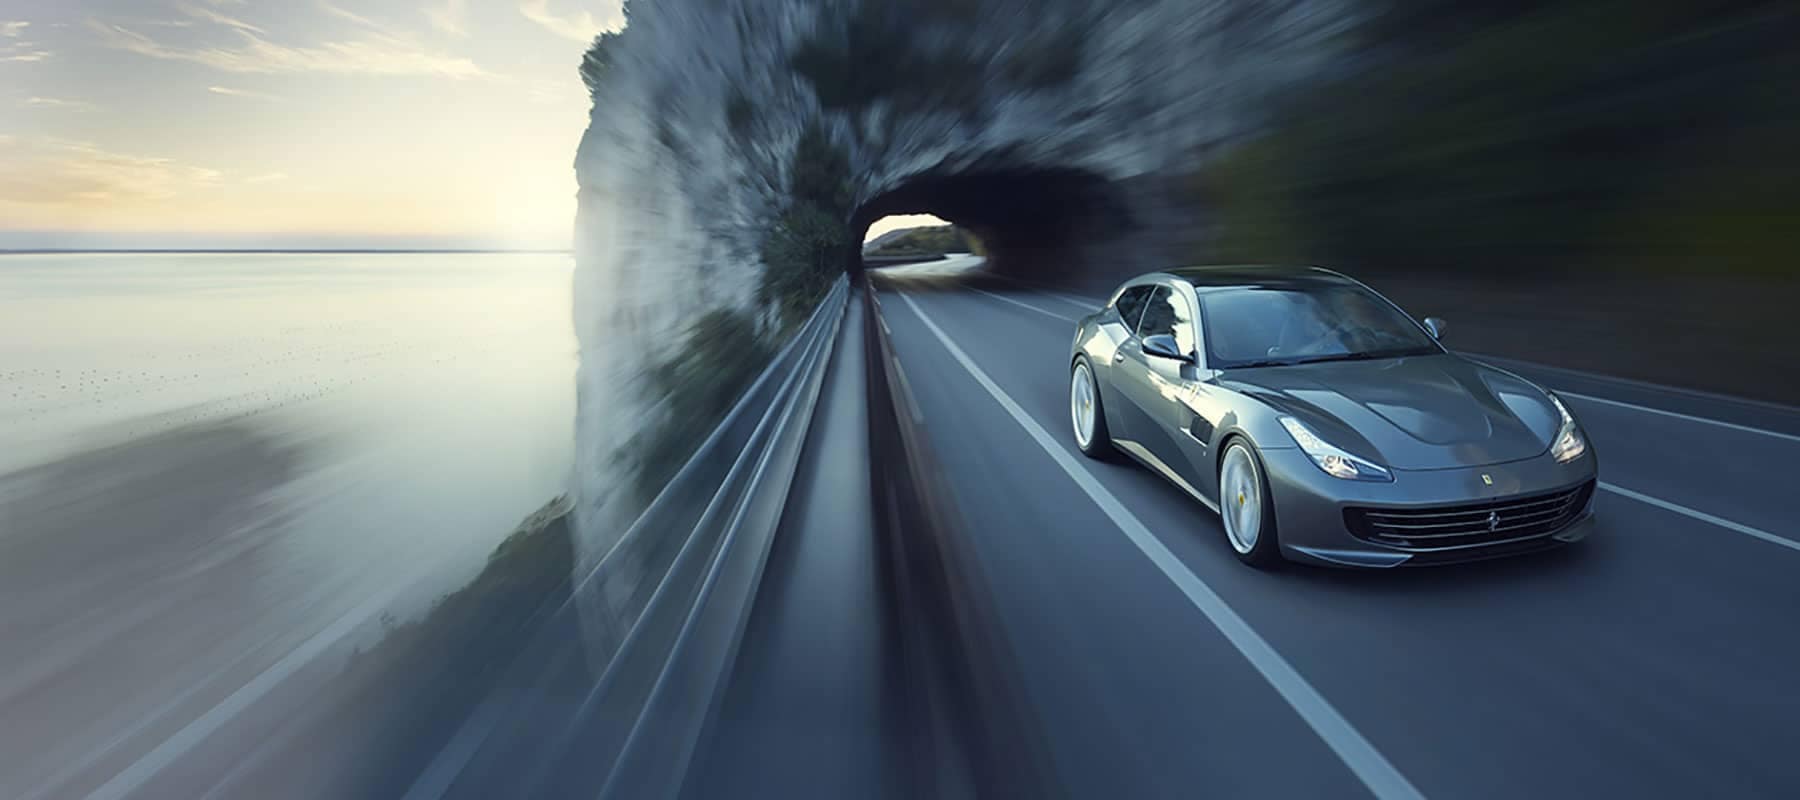 Ferrari-GTC4Lusso drives through tunnel on highway